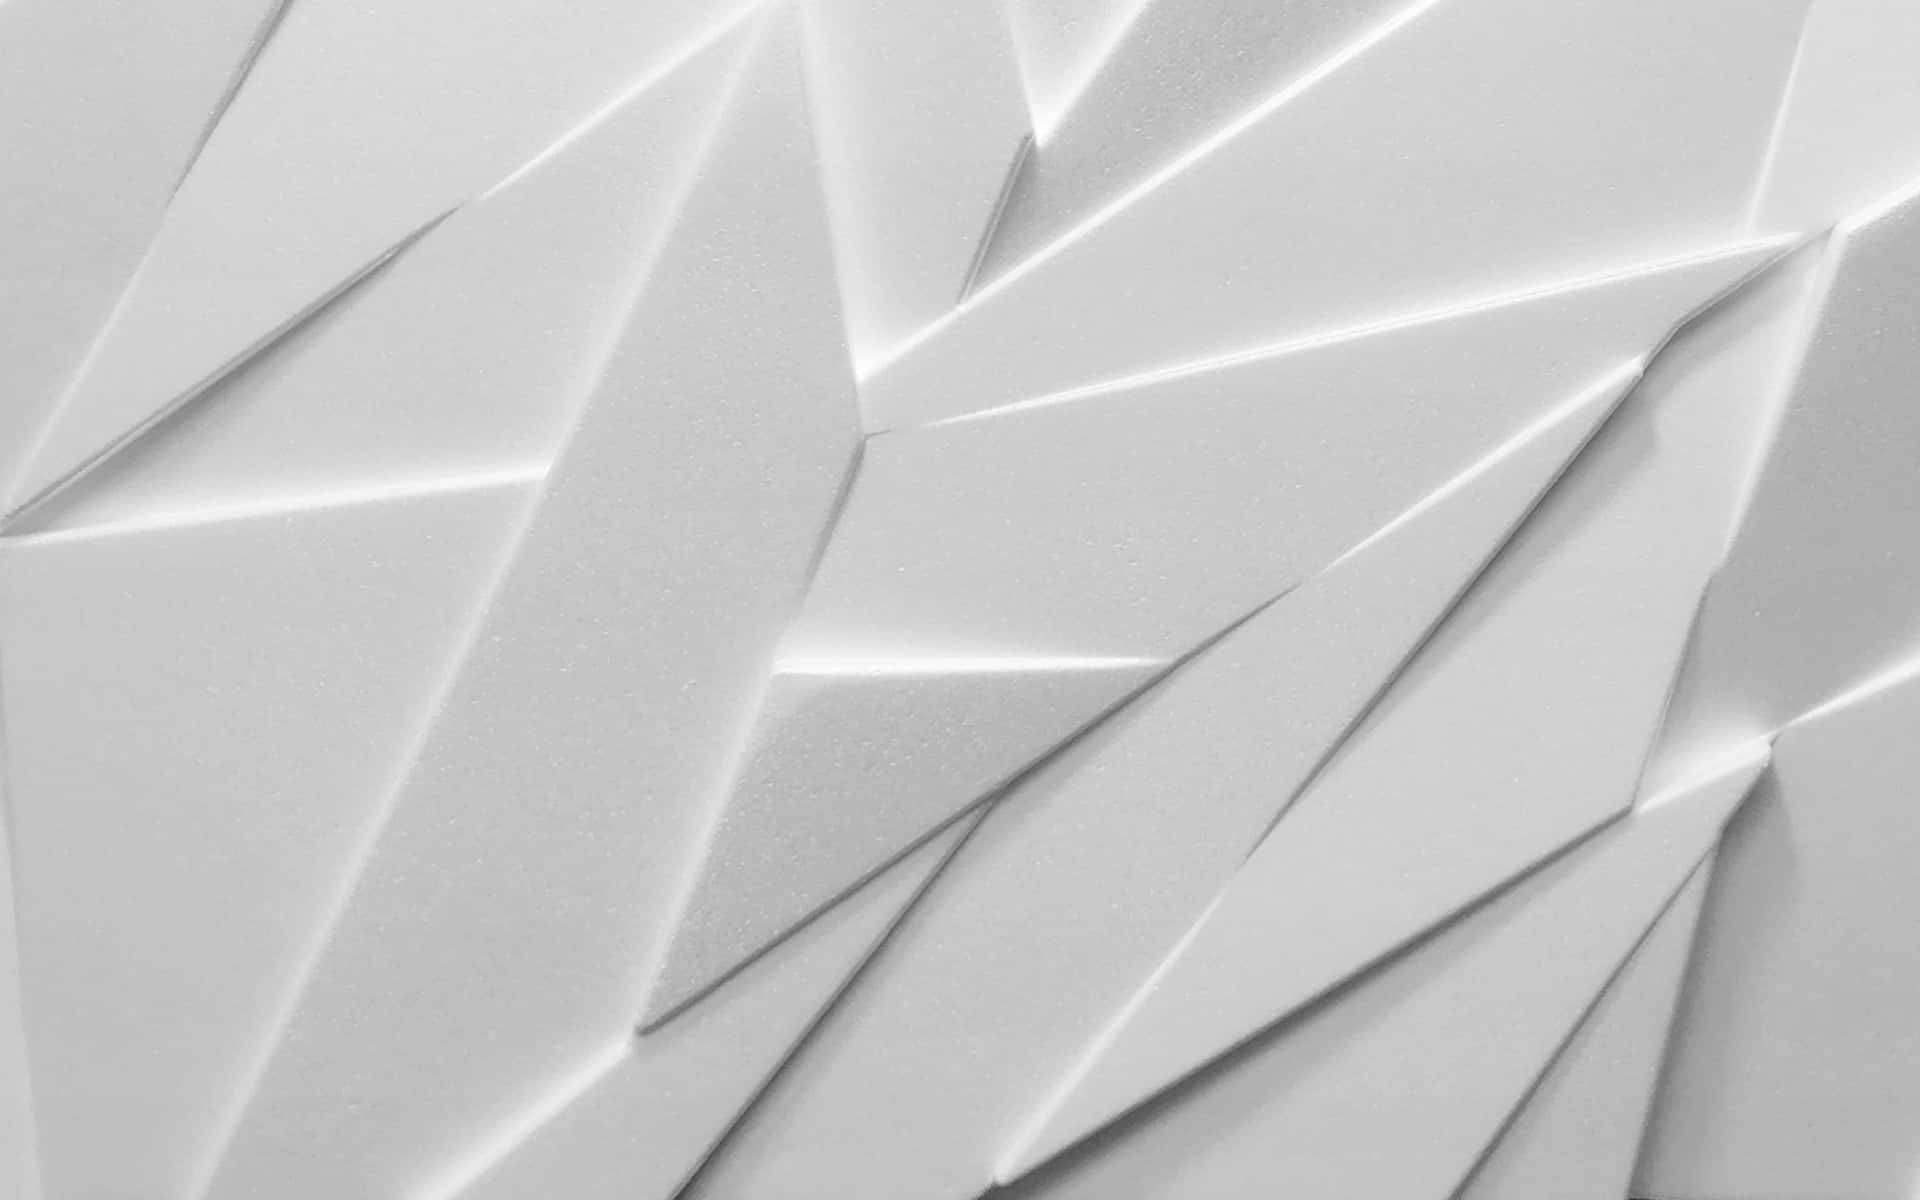 Triangular Abstract White Texture Background